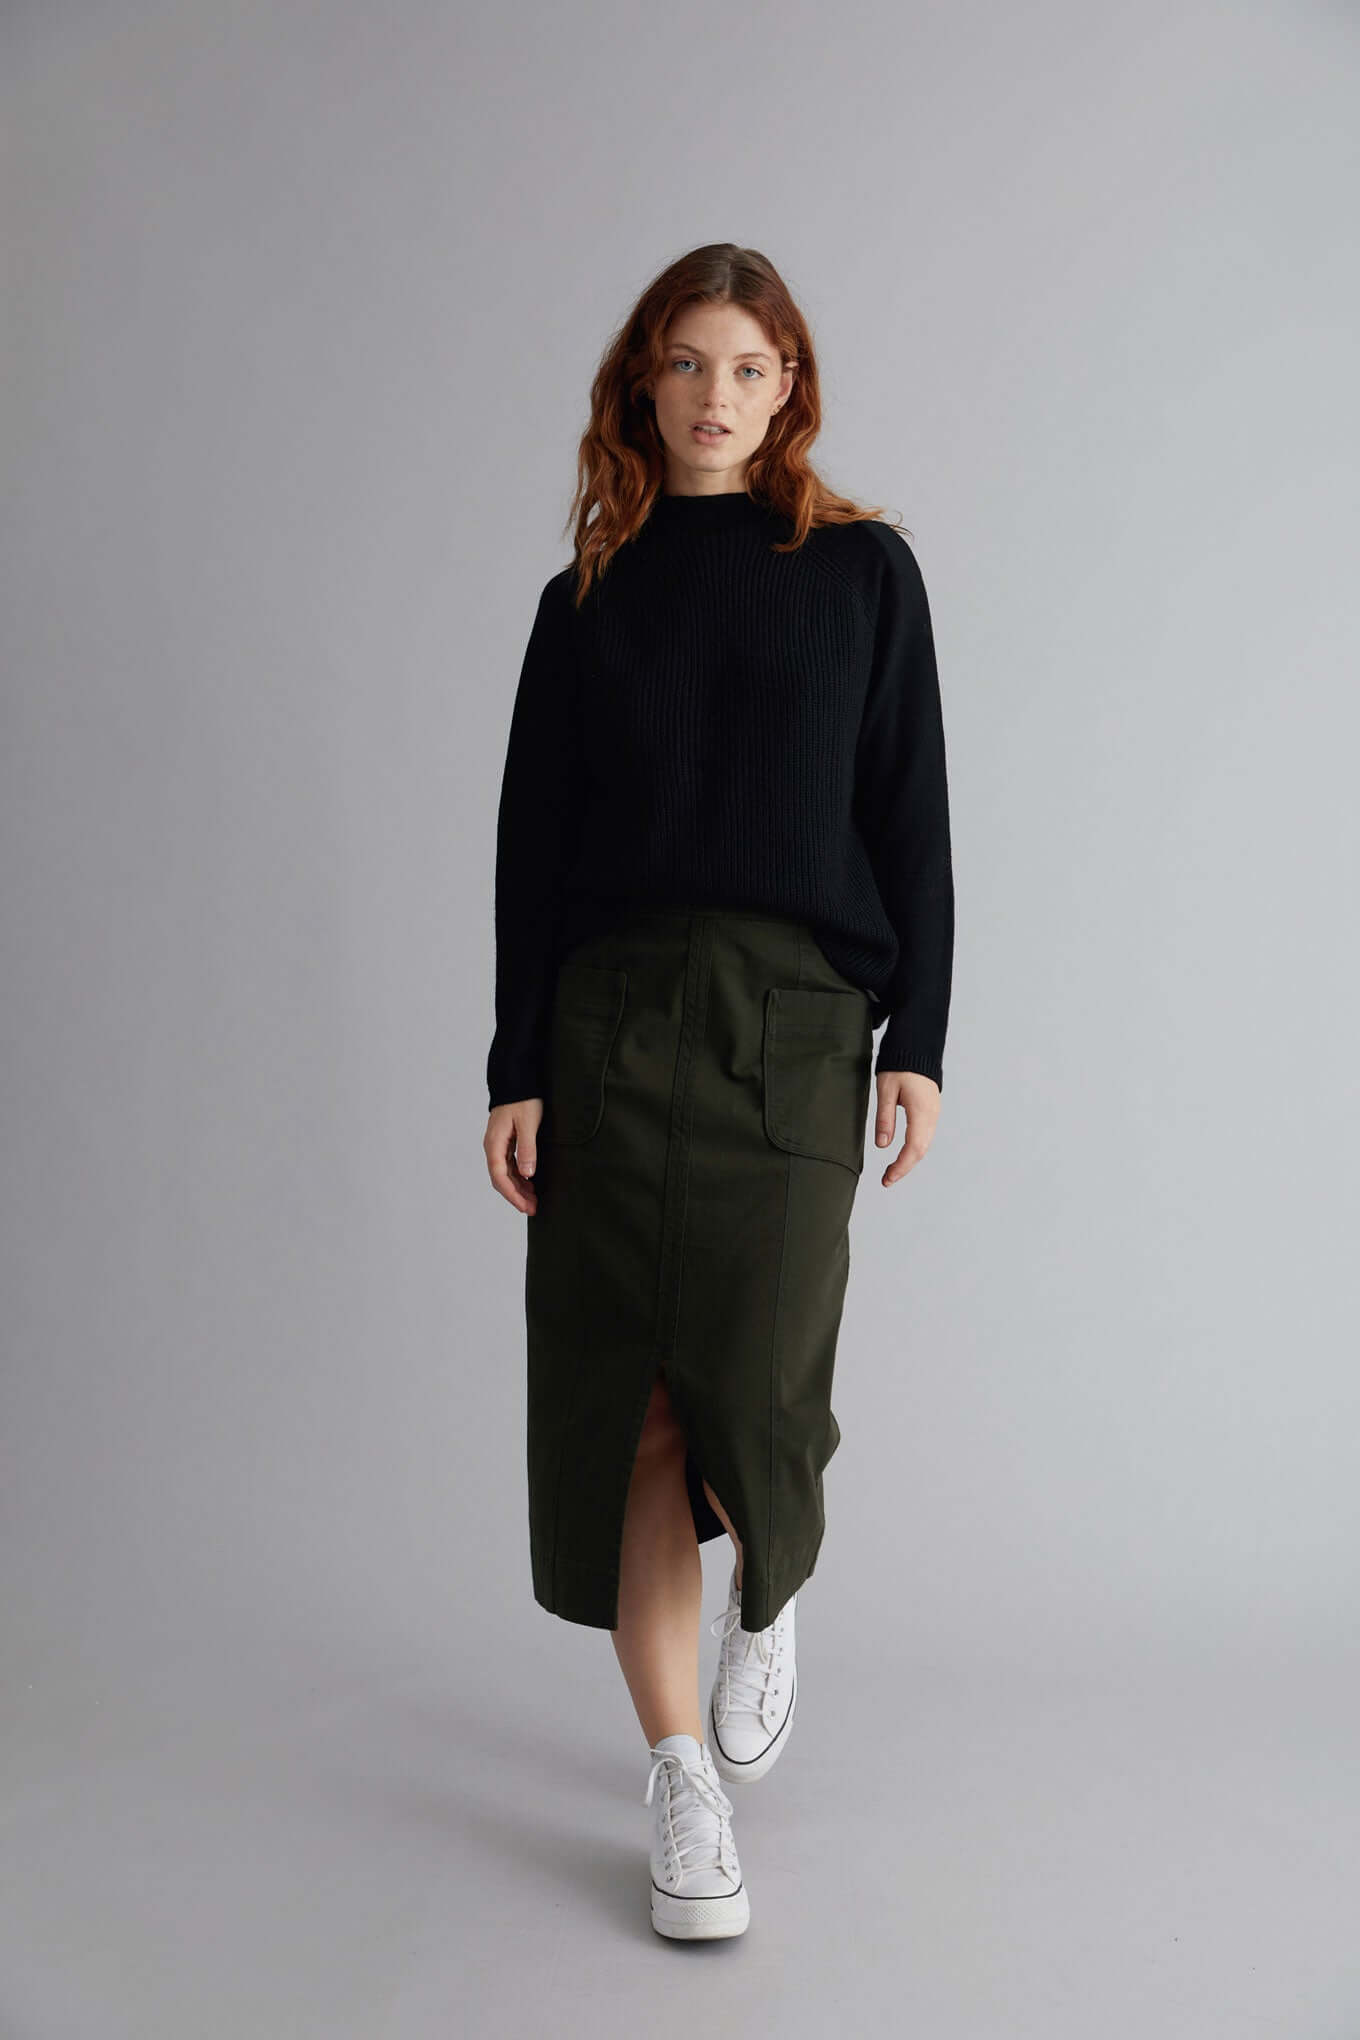 SORA Womens Organic Cotton Midi Skirt Khaki, Size 3 / UK 12 / EUR 40